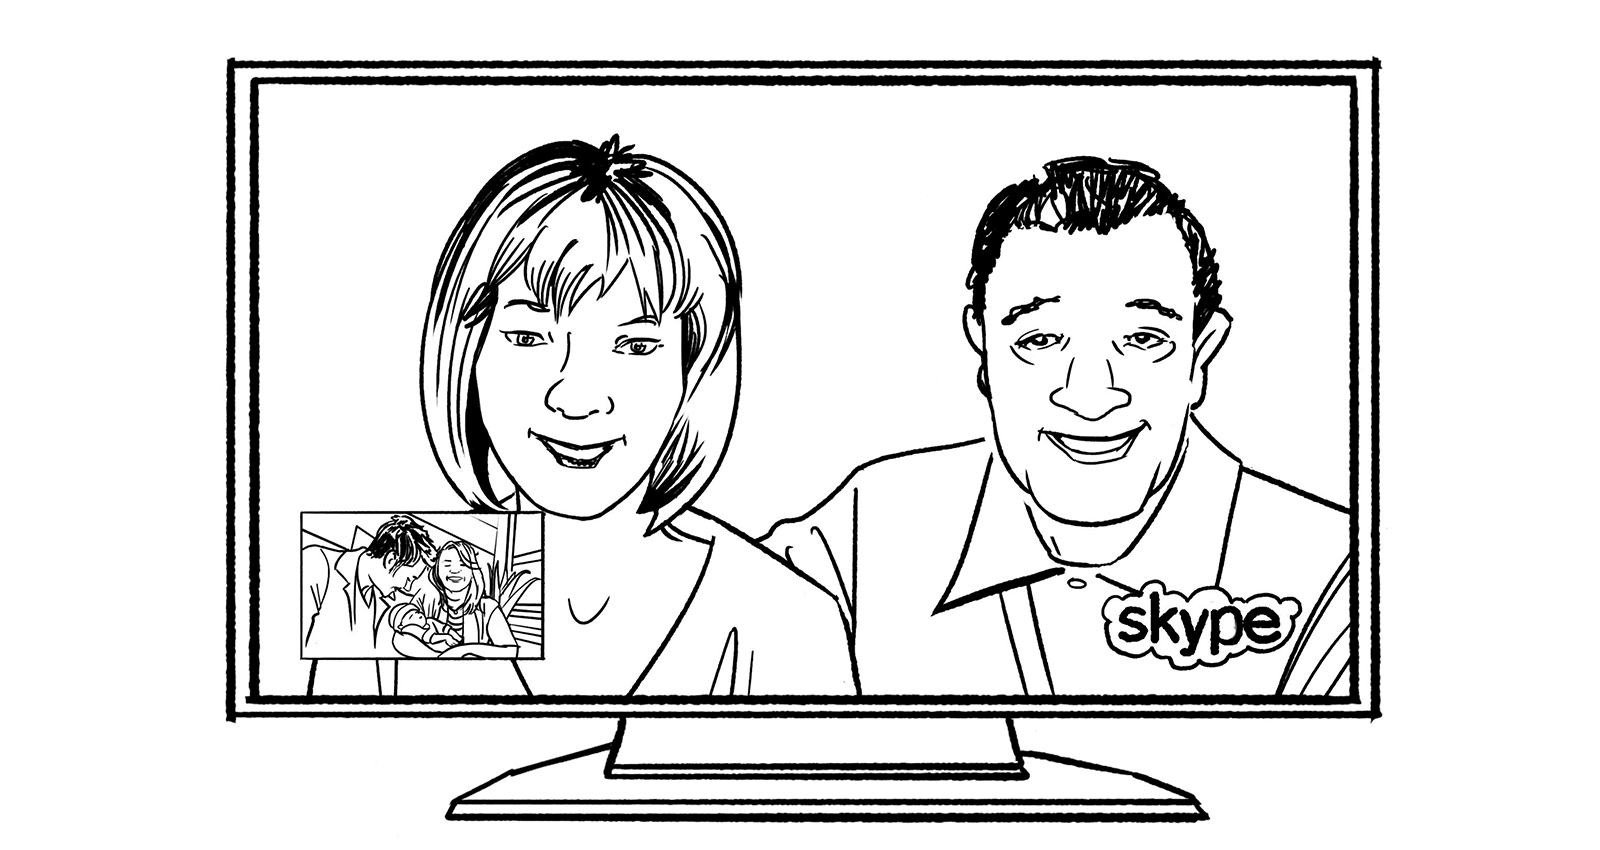 Notifications - Skype